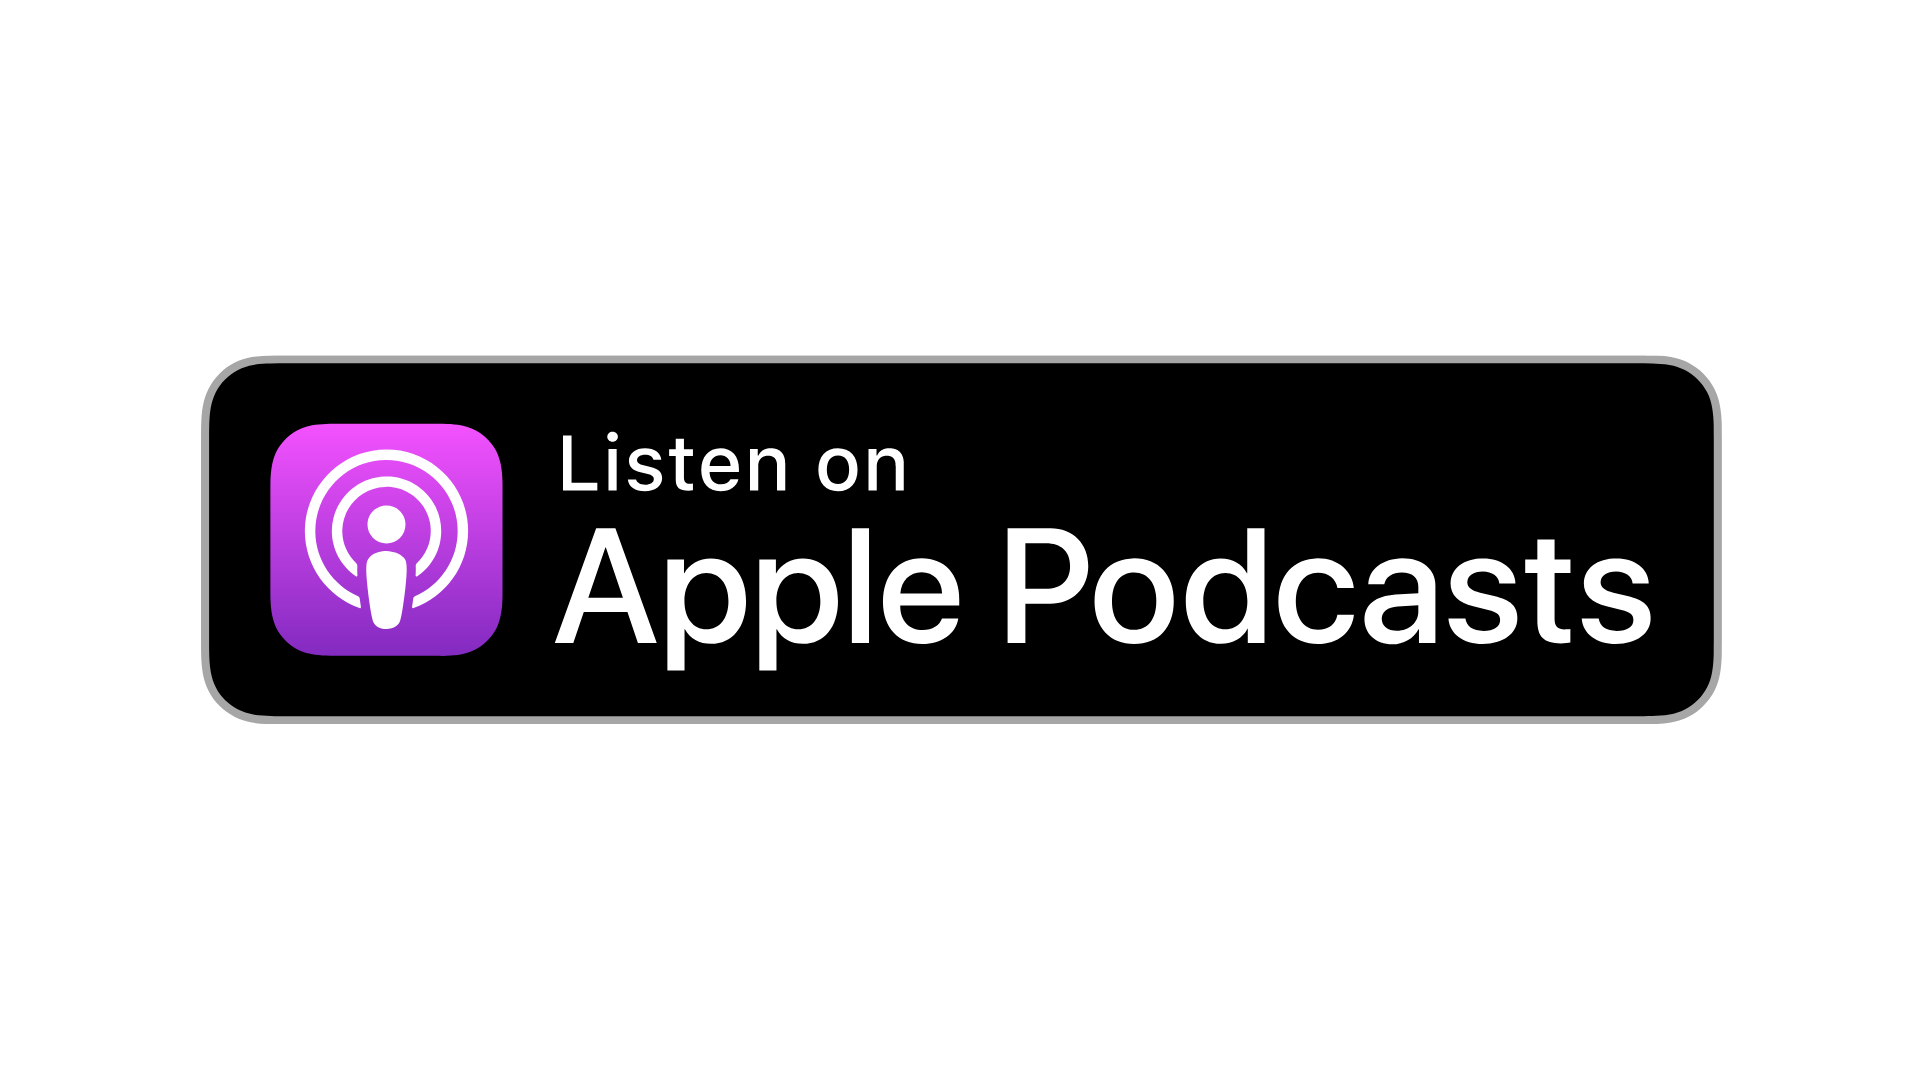 Listen podcasts. Apple подкасты. Иконка Apple Podcasts. Логотипы подкастов. Слушайте в Apple Podcasts.